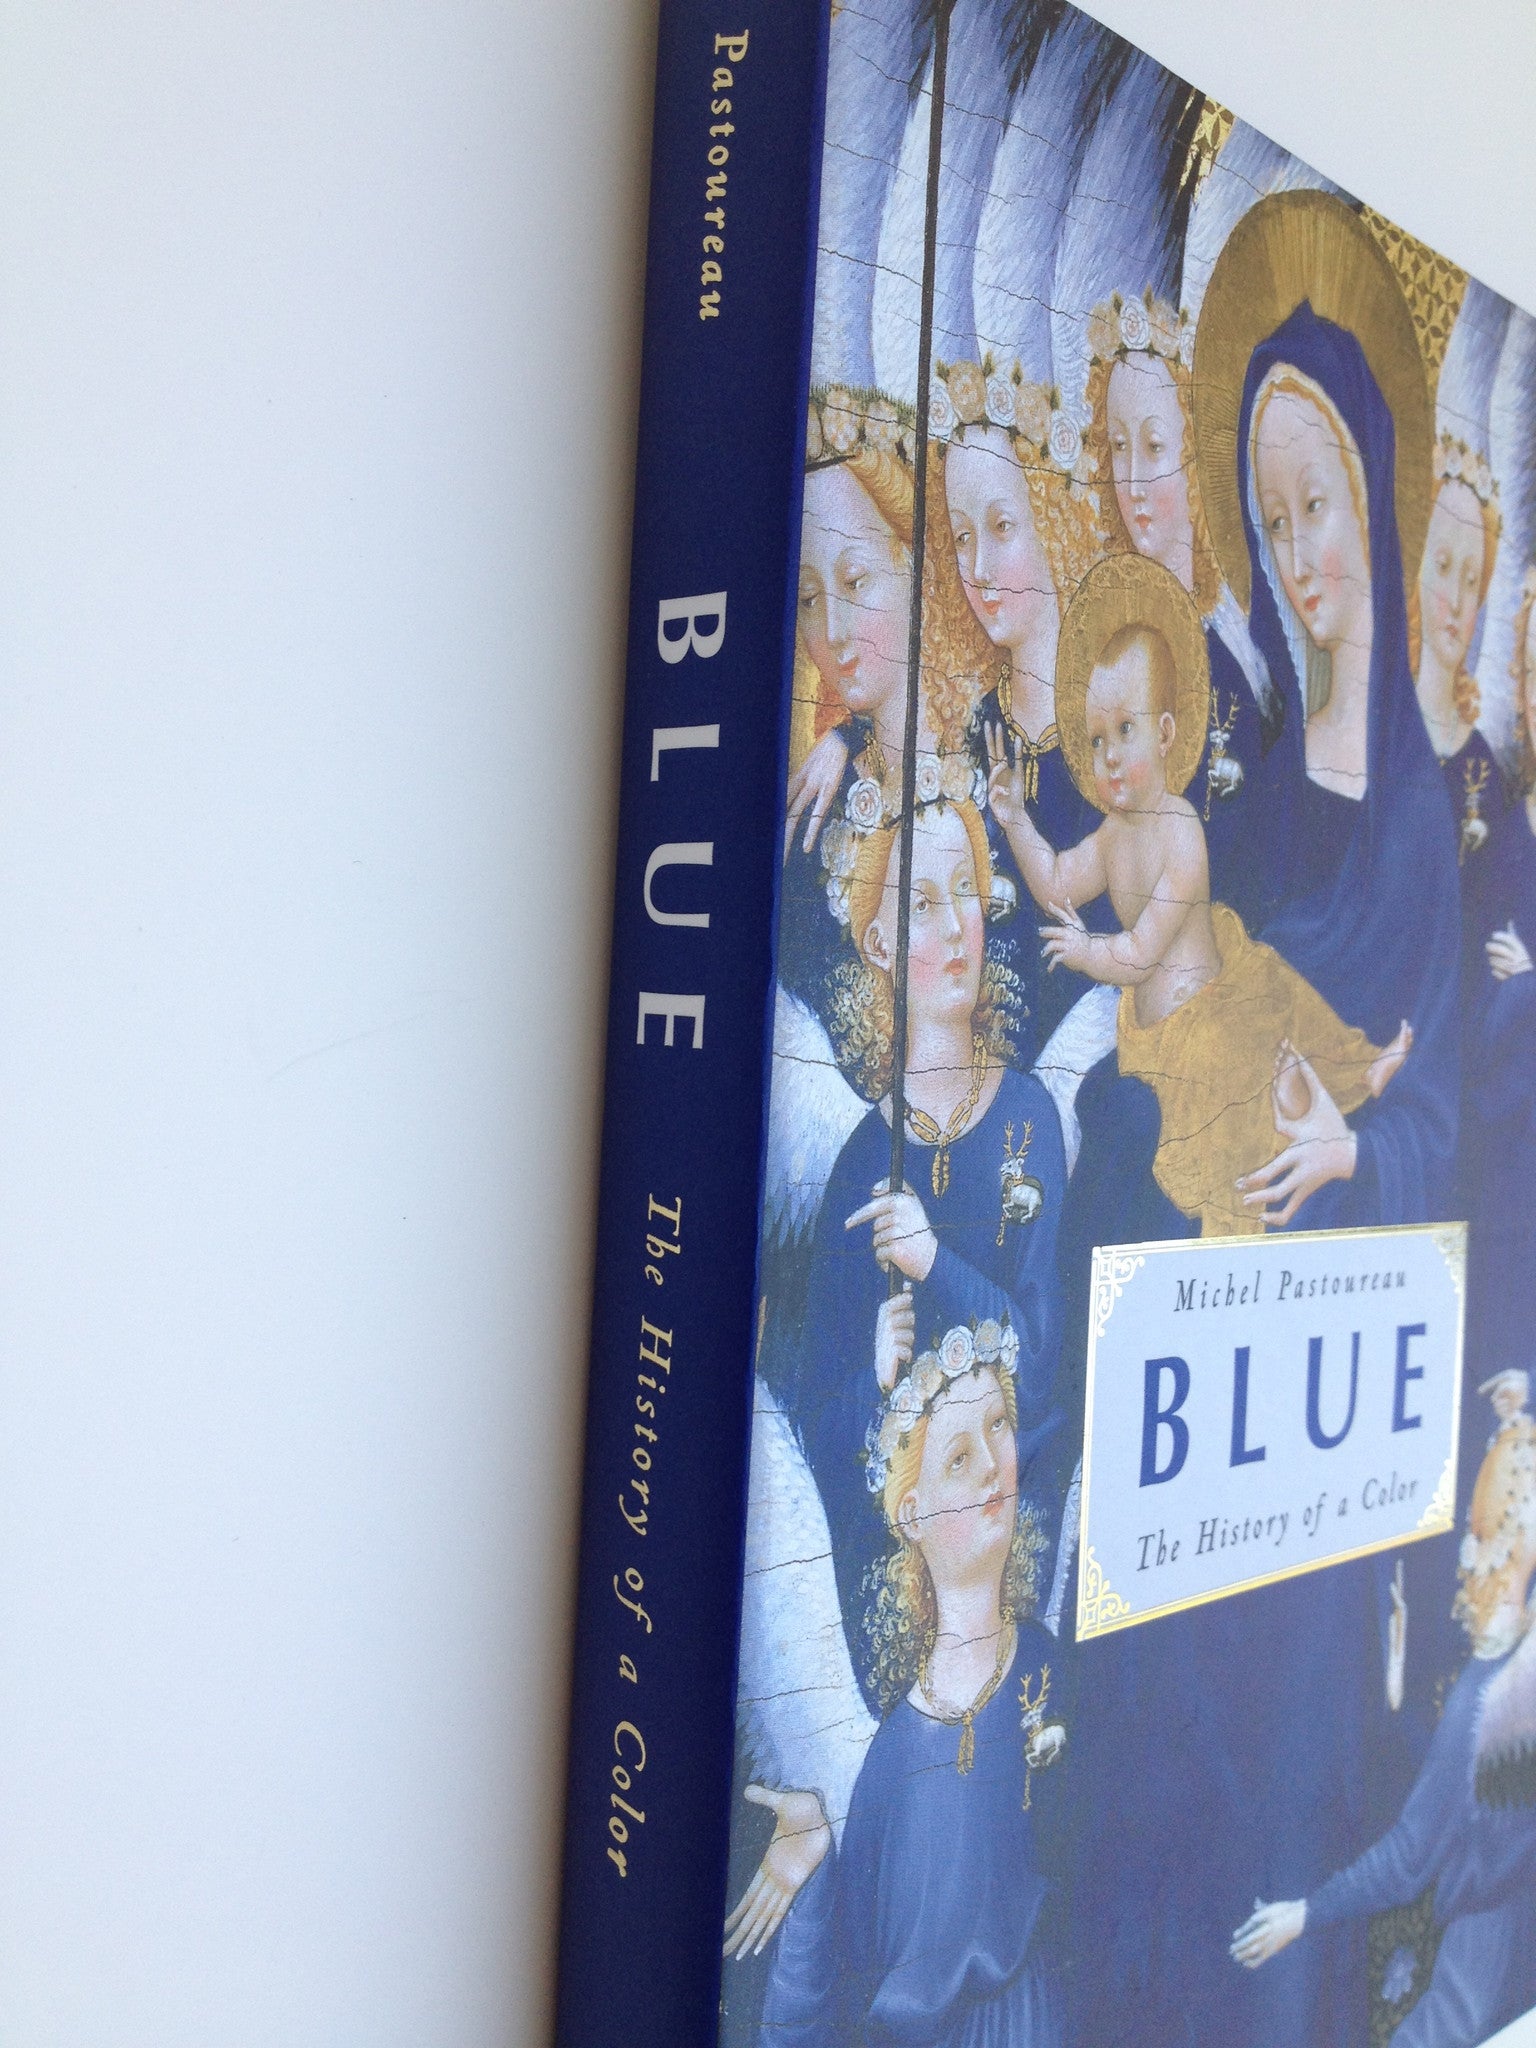 Pondering Art: Blue, the History of a Color by Michel Pastoureau